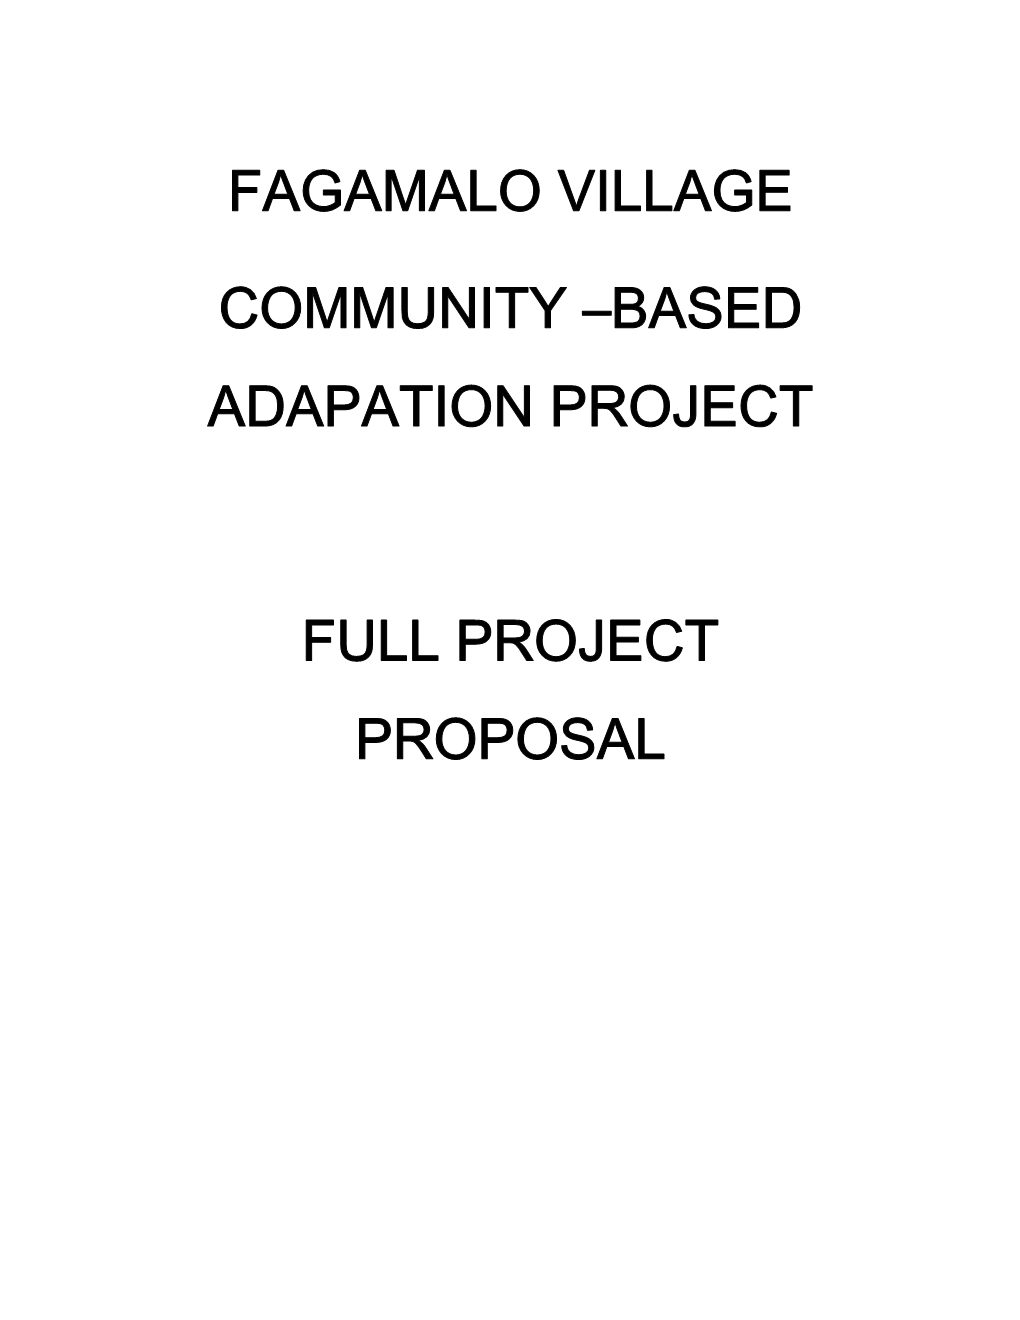 Fagamalo Village Community